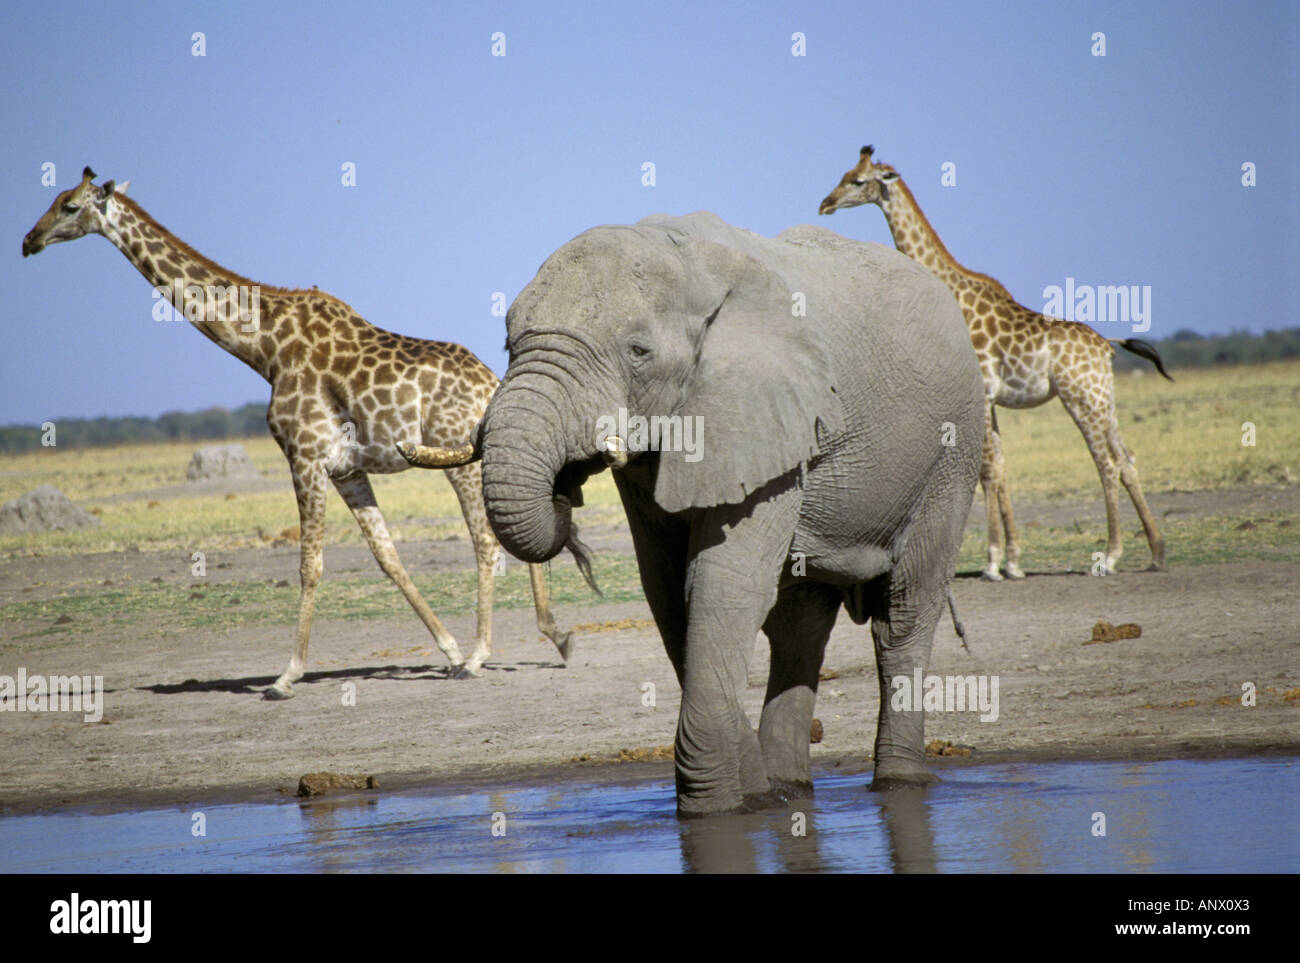 Africa, Kenia Masai Mara. Elefante africano (Loxodonta africana) e giraffe al foro per l'acqua Foto Stock